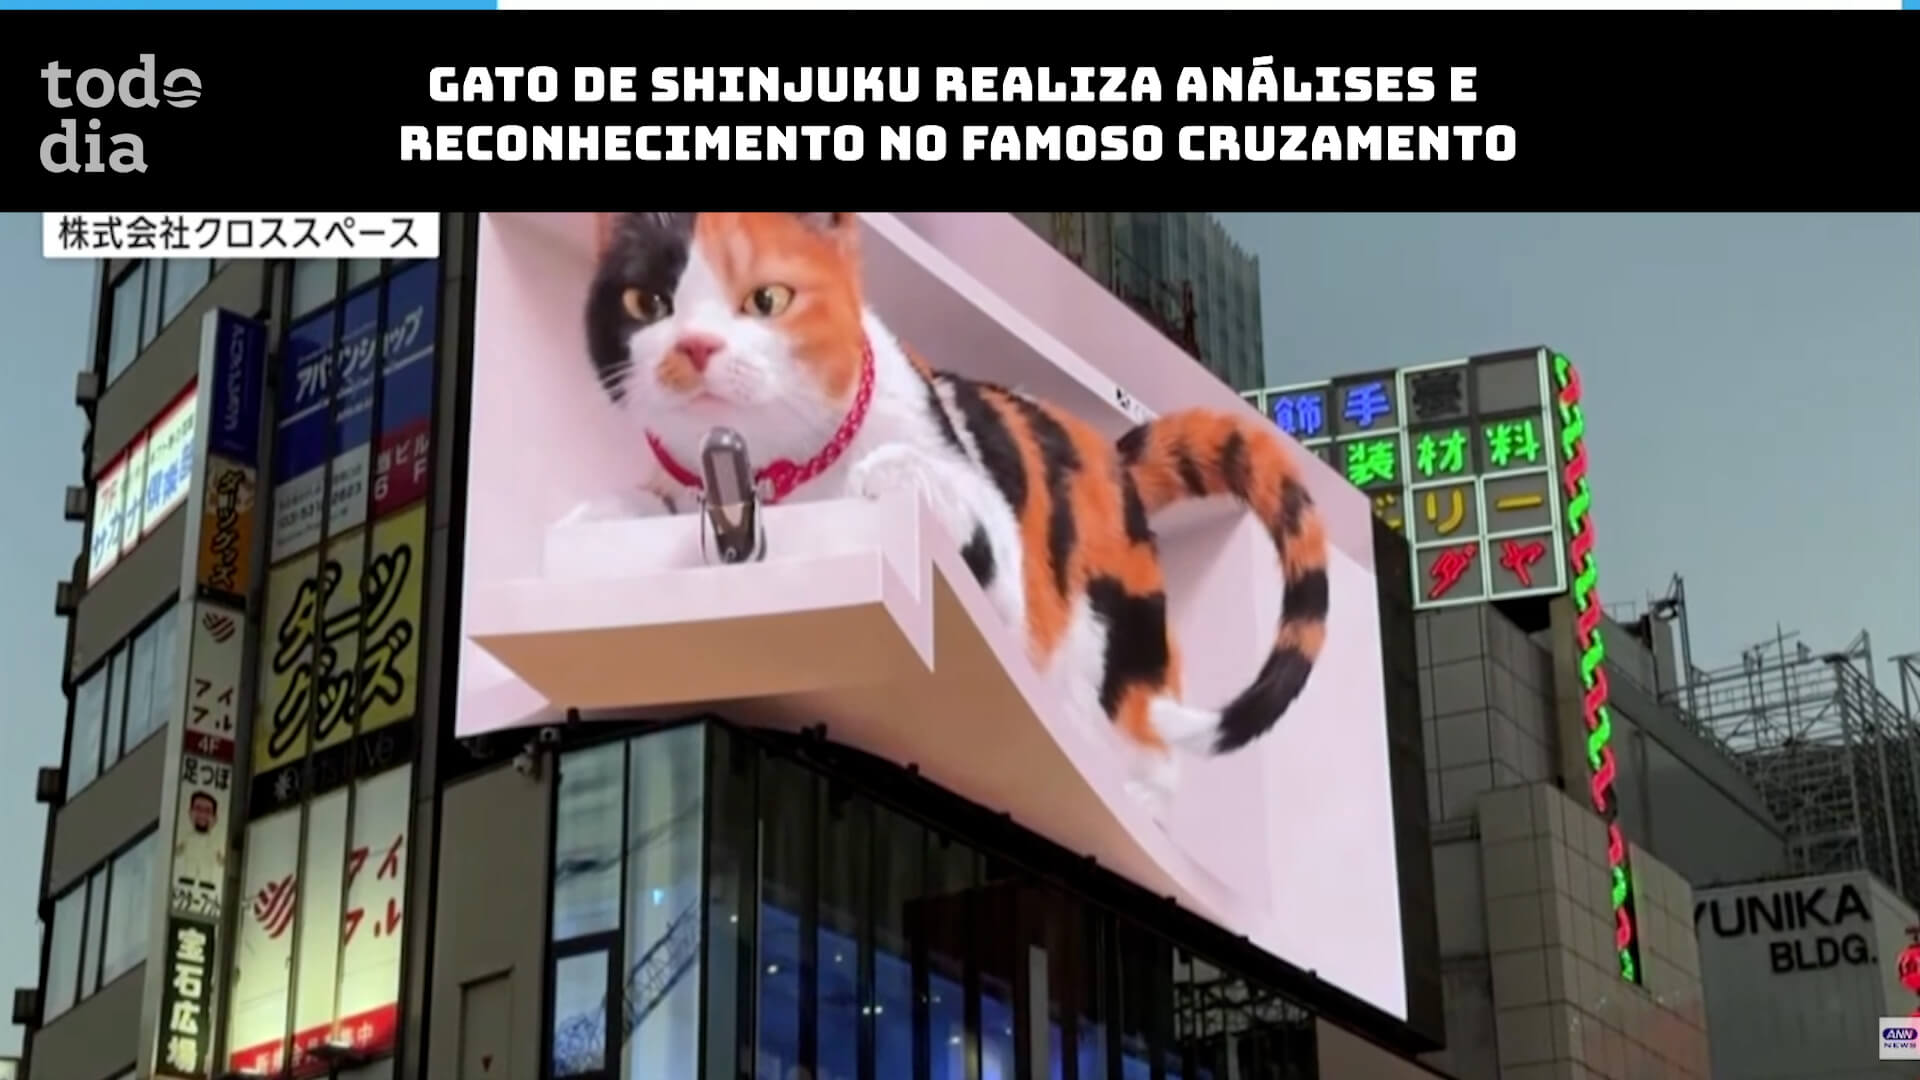 Gato de Shinjuku realiza análises e reconhecimento no famoso cruzamento